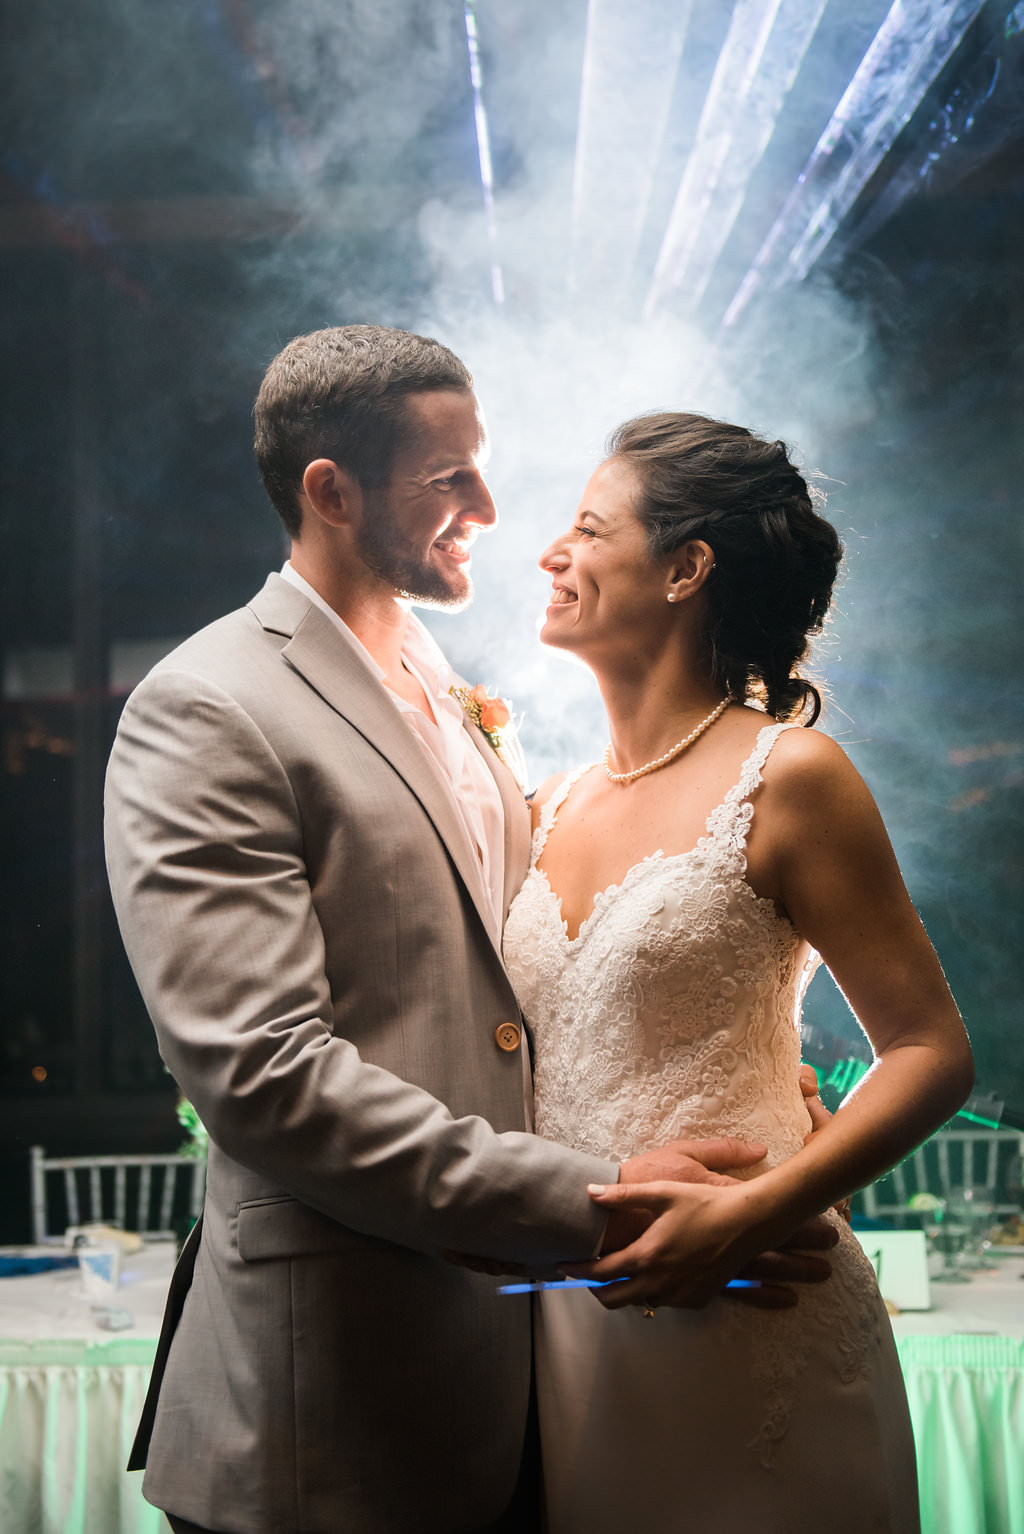 Bride and Groom Portrait in Wedding Enzoani Dress | Tampa Bay Wedding Photographer Kera Photography